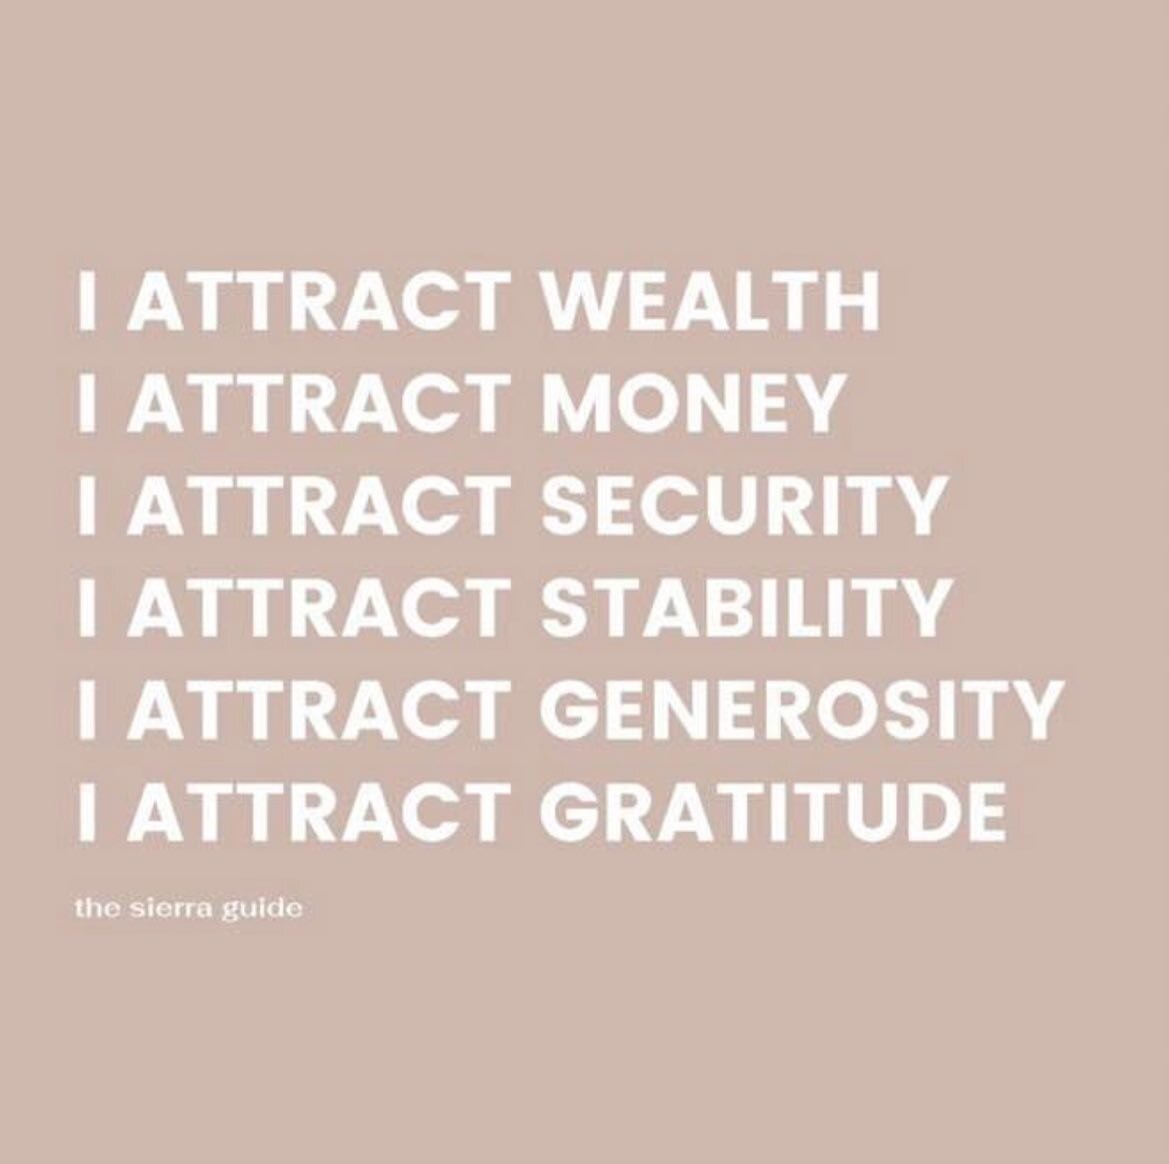 #WealthAttraction
#MoneyMagnet
#SecureFuture
#StabilityFirst
#GenerosityAbounds
#GratitudeOverflow
#AbundanceMindset
#FinancialFreedom
#AttractingWealth
#ManifestingAbundance
#ProsperityLifestyle
#GratefulHeart
#MoneyFlow
#SecureLife
#StabilityGoals